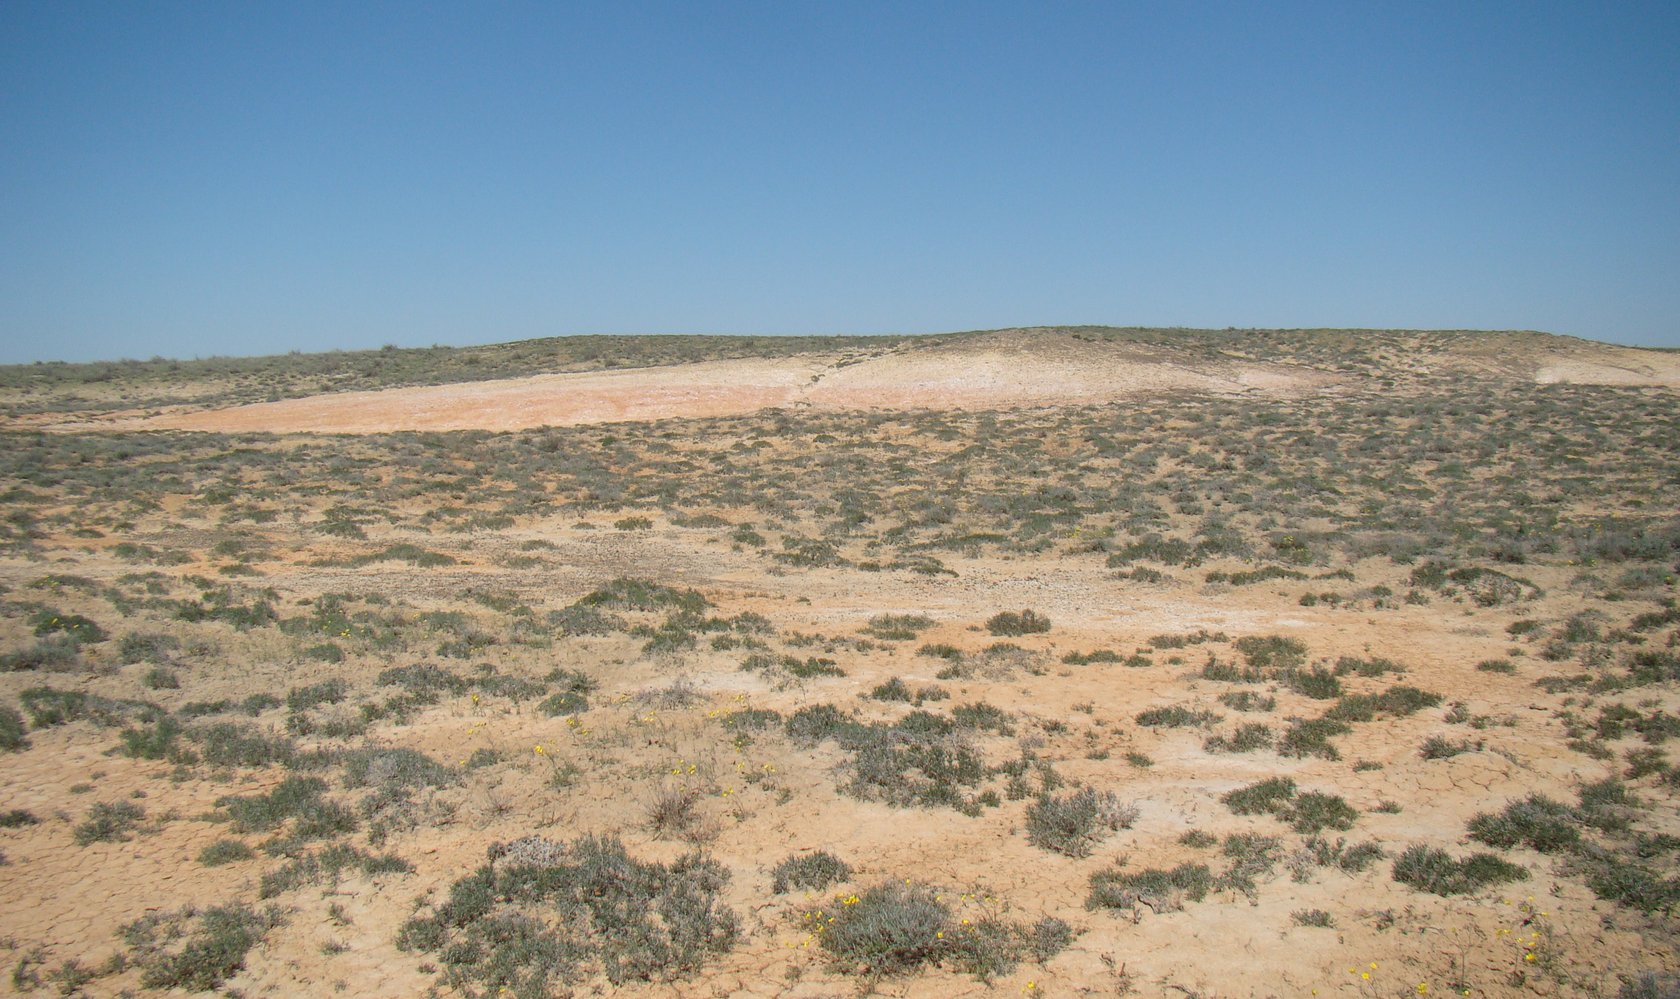 Байконур, image of landscape/habitat.